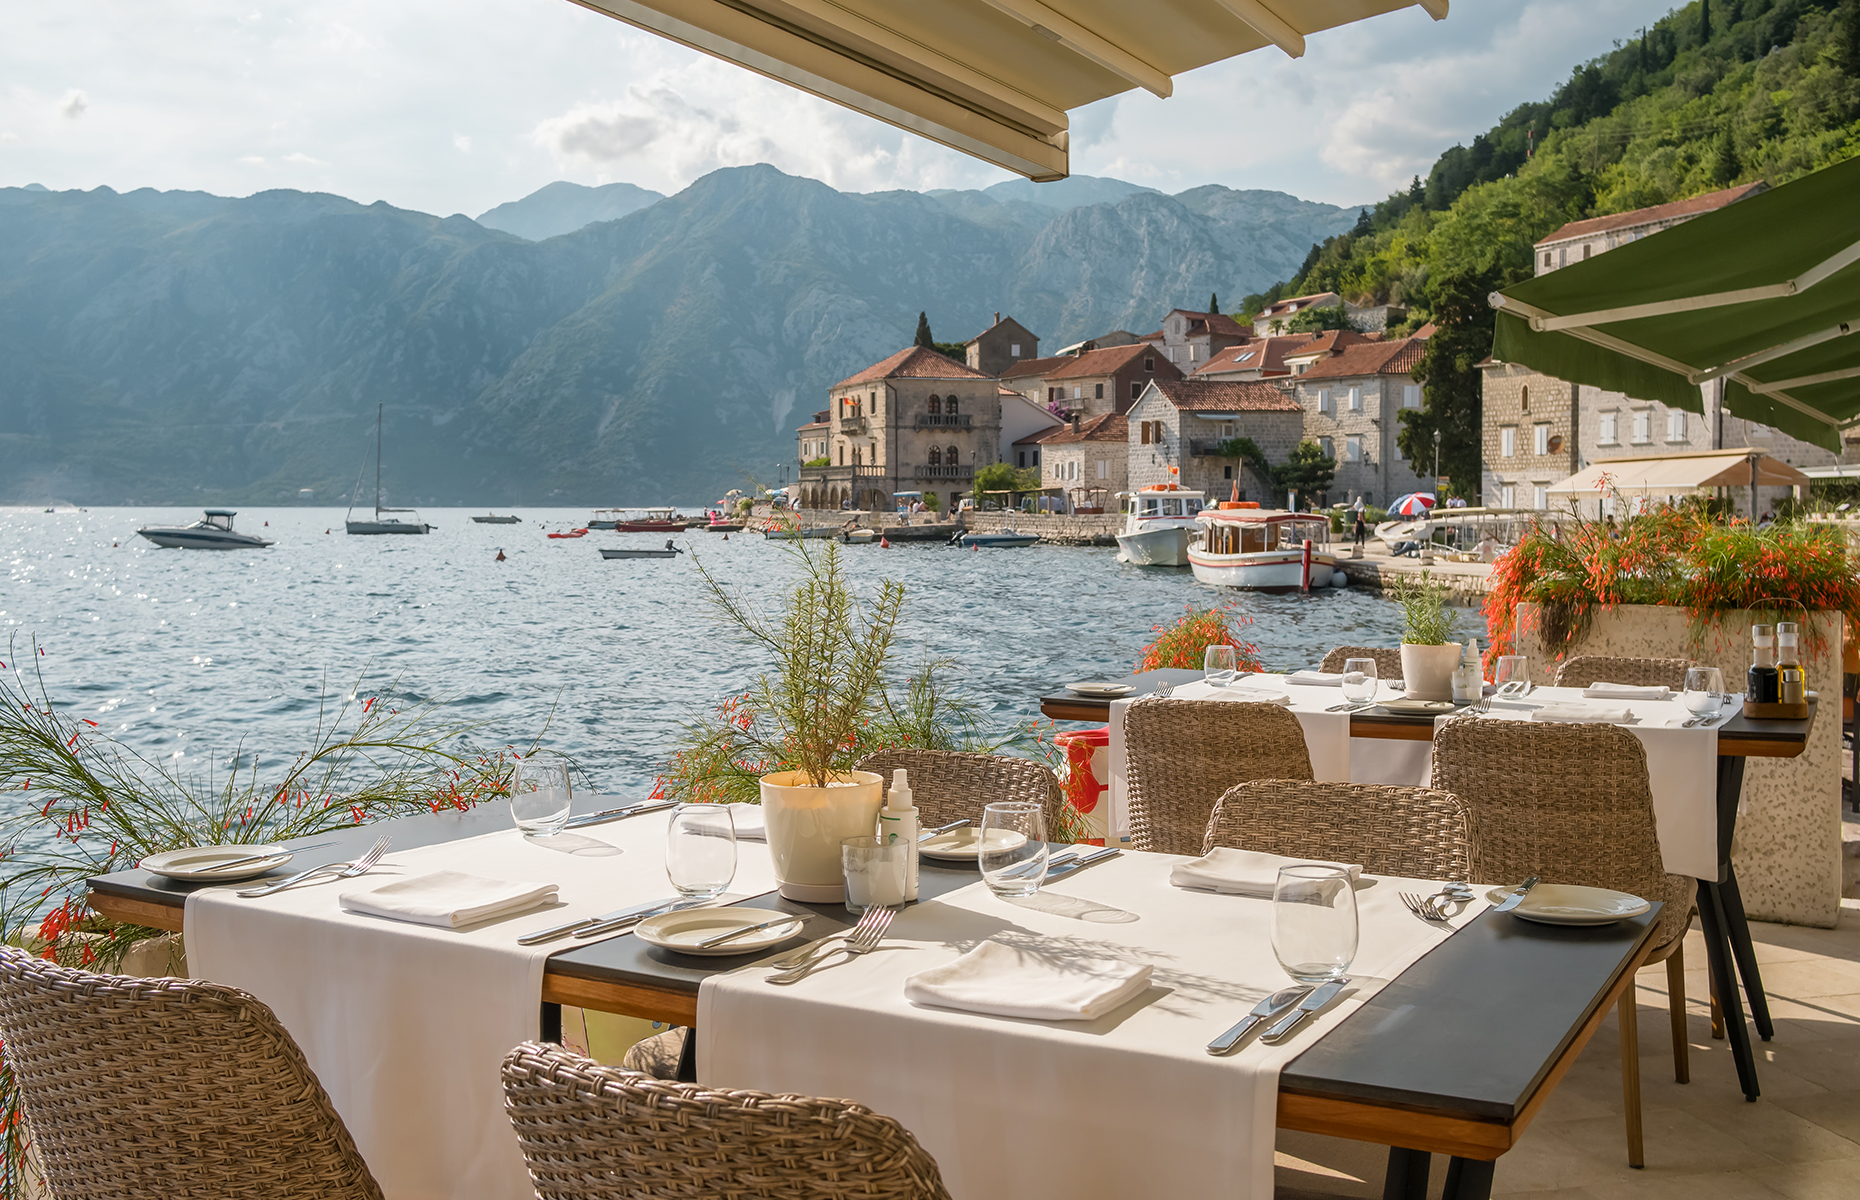 Restaurant at Bay of Kotor, Montenegro. (Image: Mazur Travel/Shutterstock)